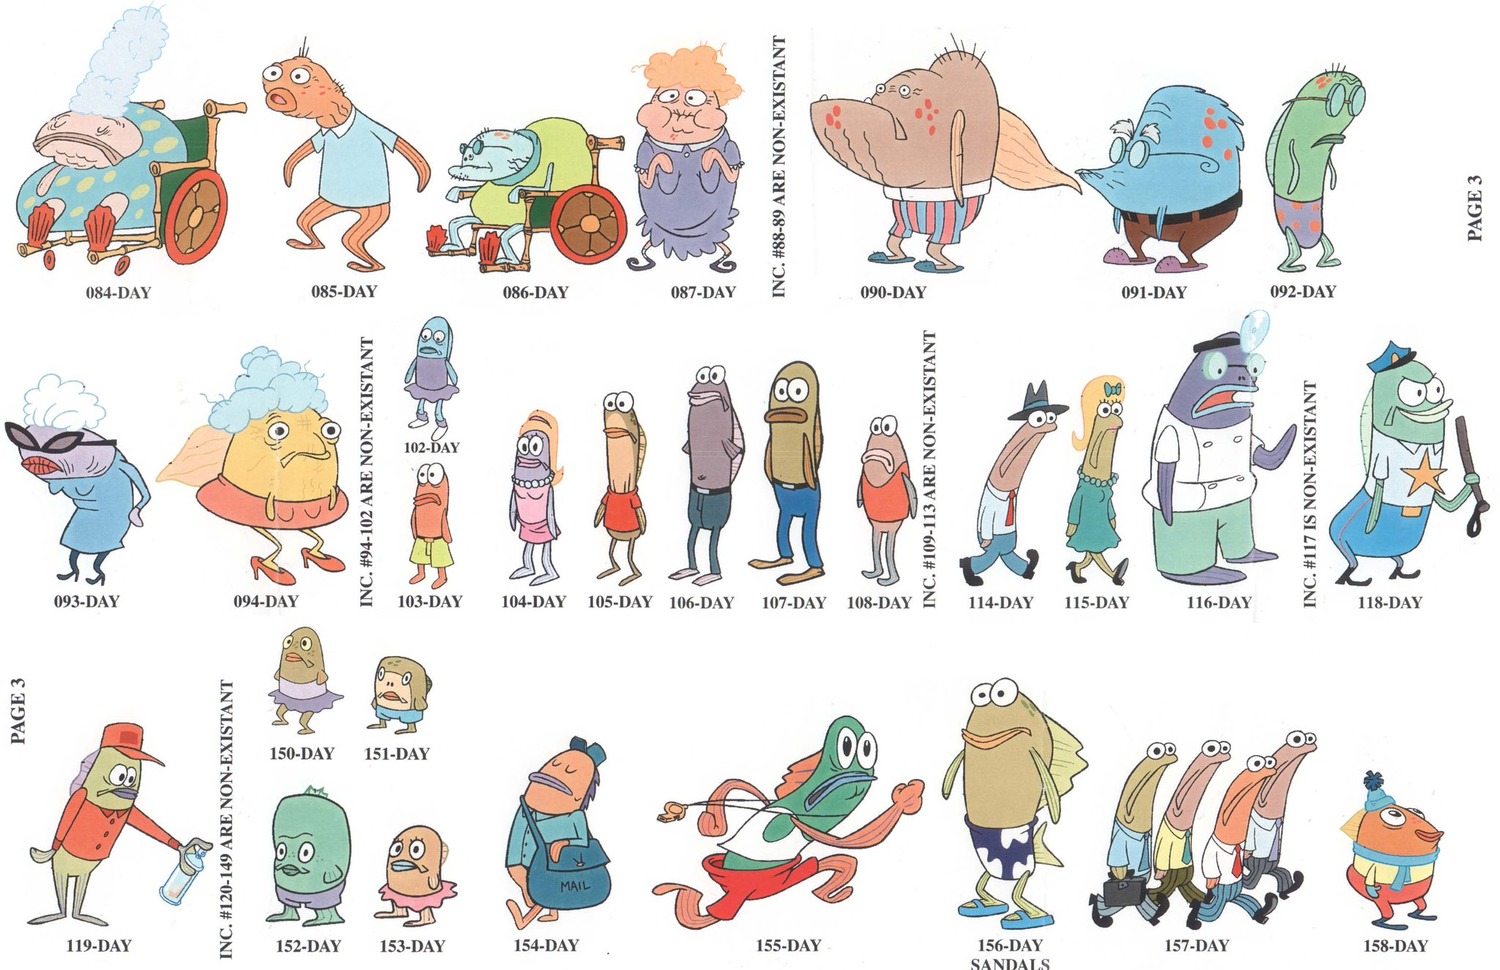 Artist Unknown Spongebob Squarepants Character Design Production